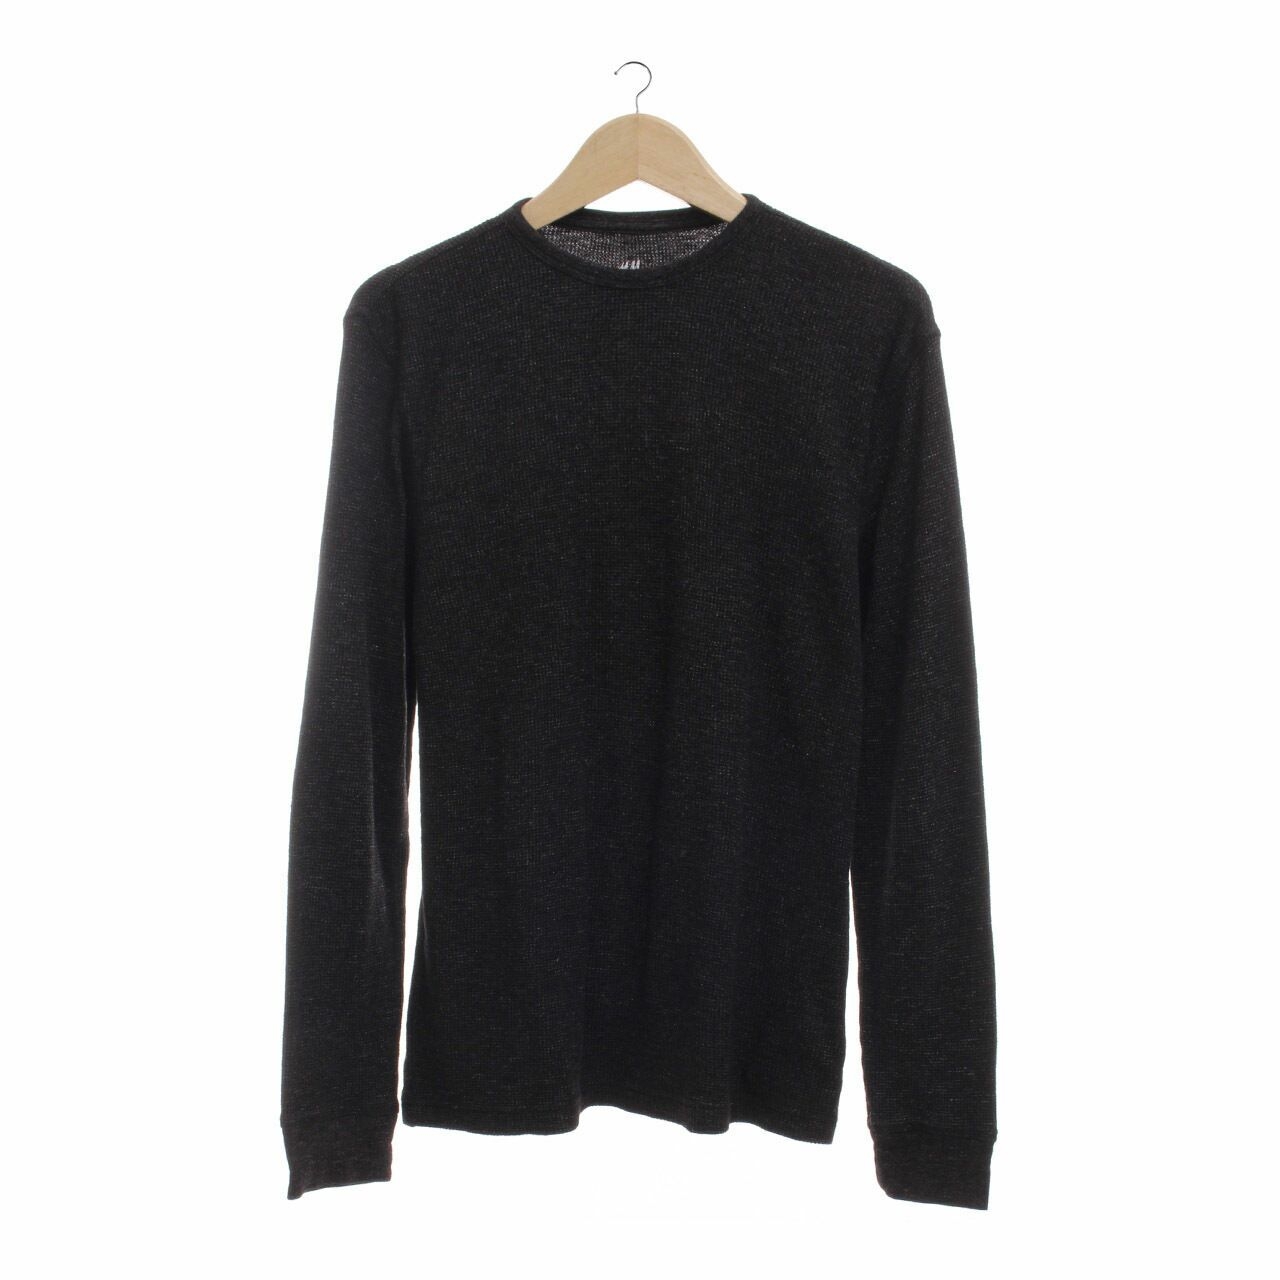 H&M Dark Grey Sweater